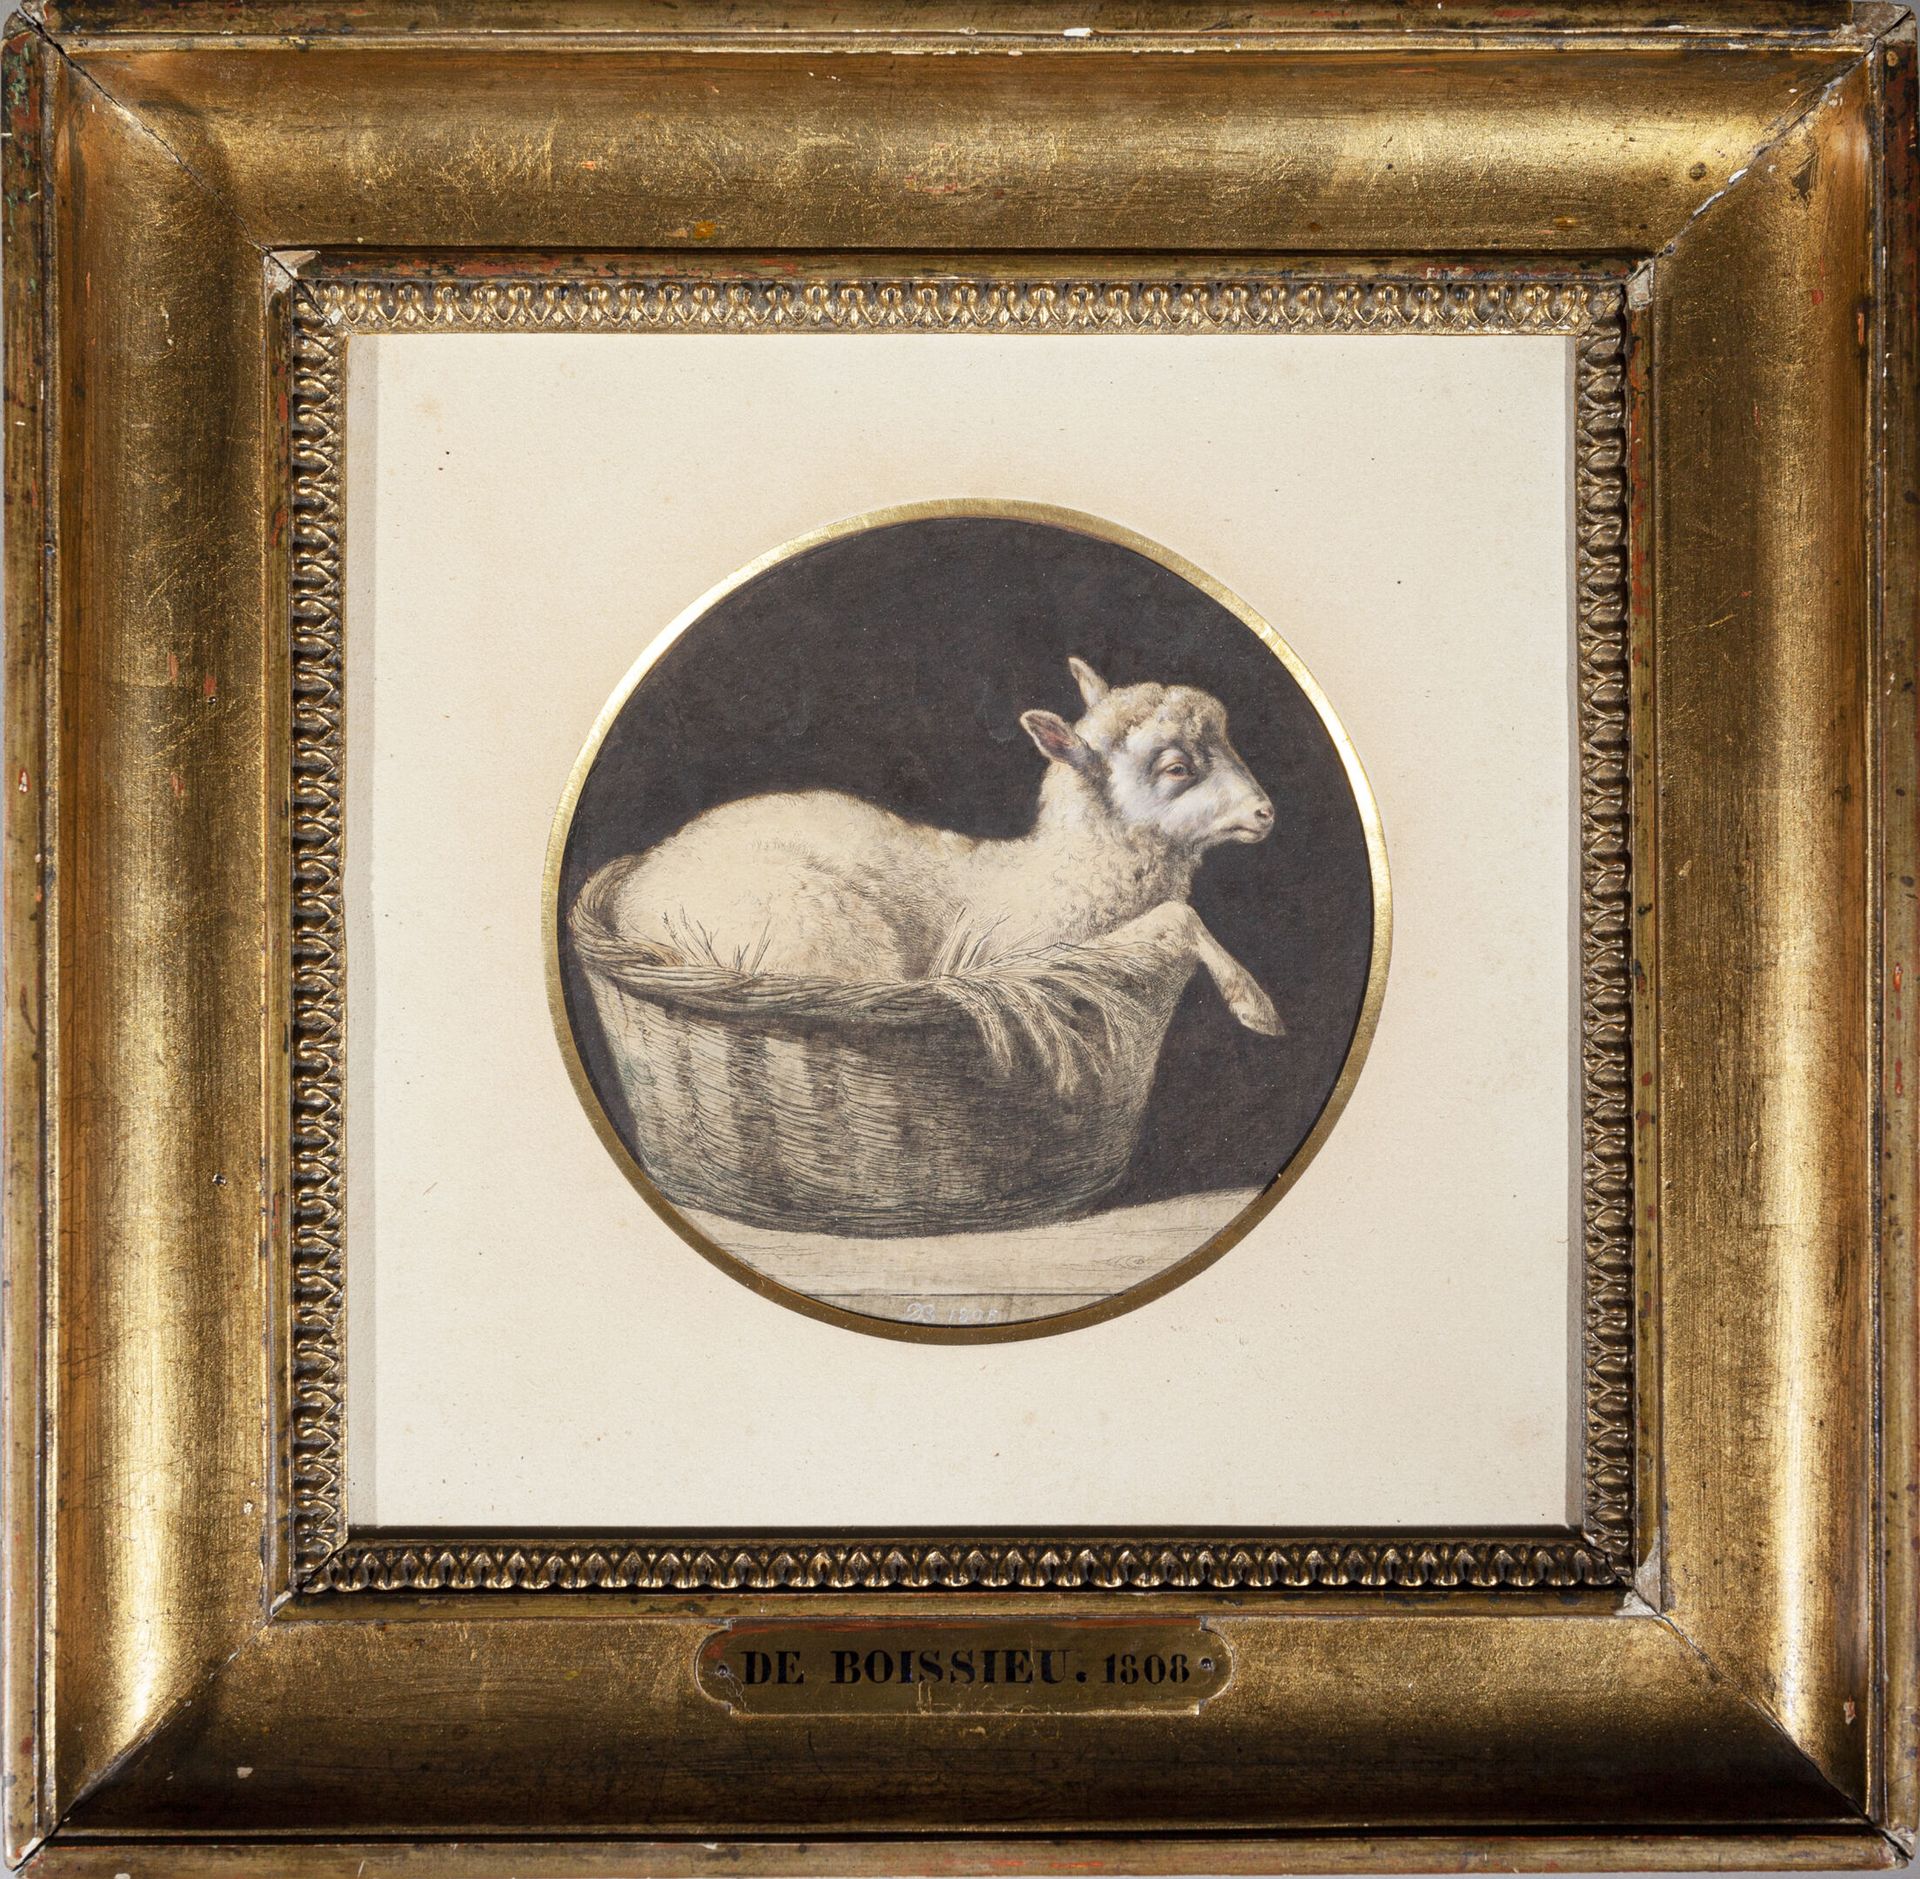 Null Jean-Jacques de BOISSIEU (1736-1810)
Das Lamm in seinem Korb. 1808 
Wiedera&hellip;